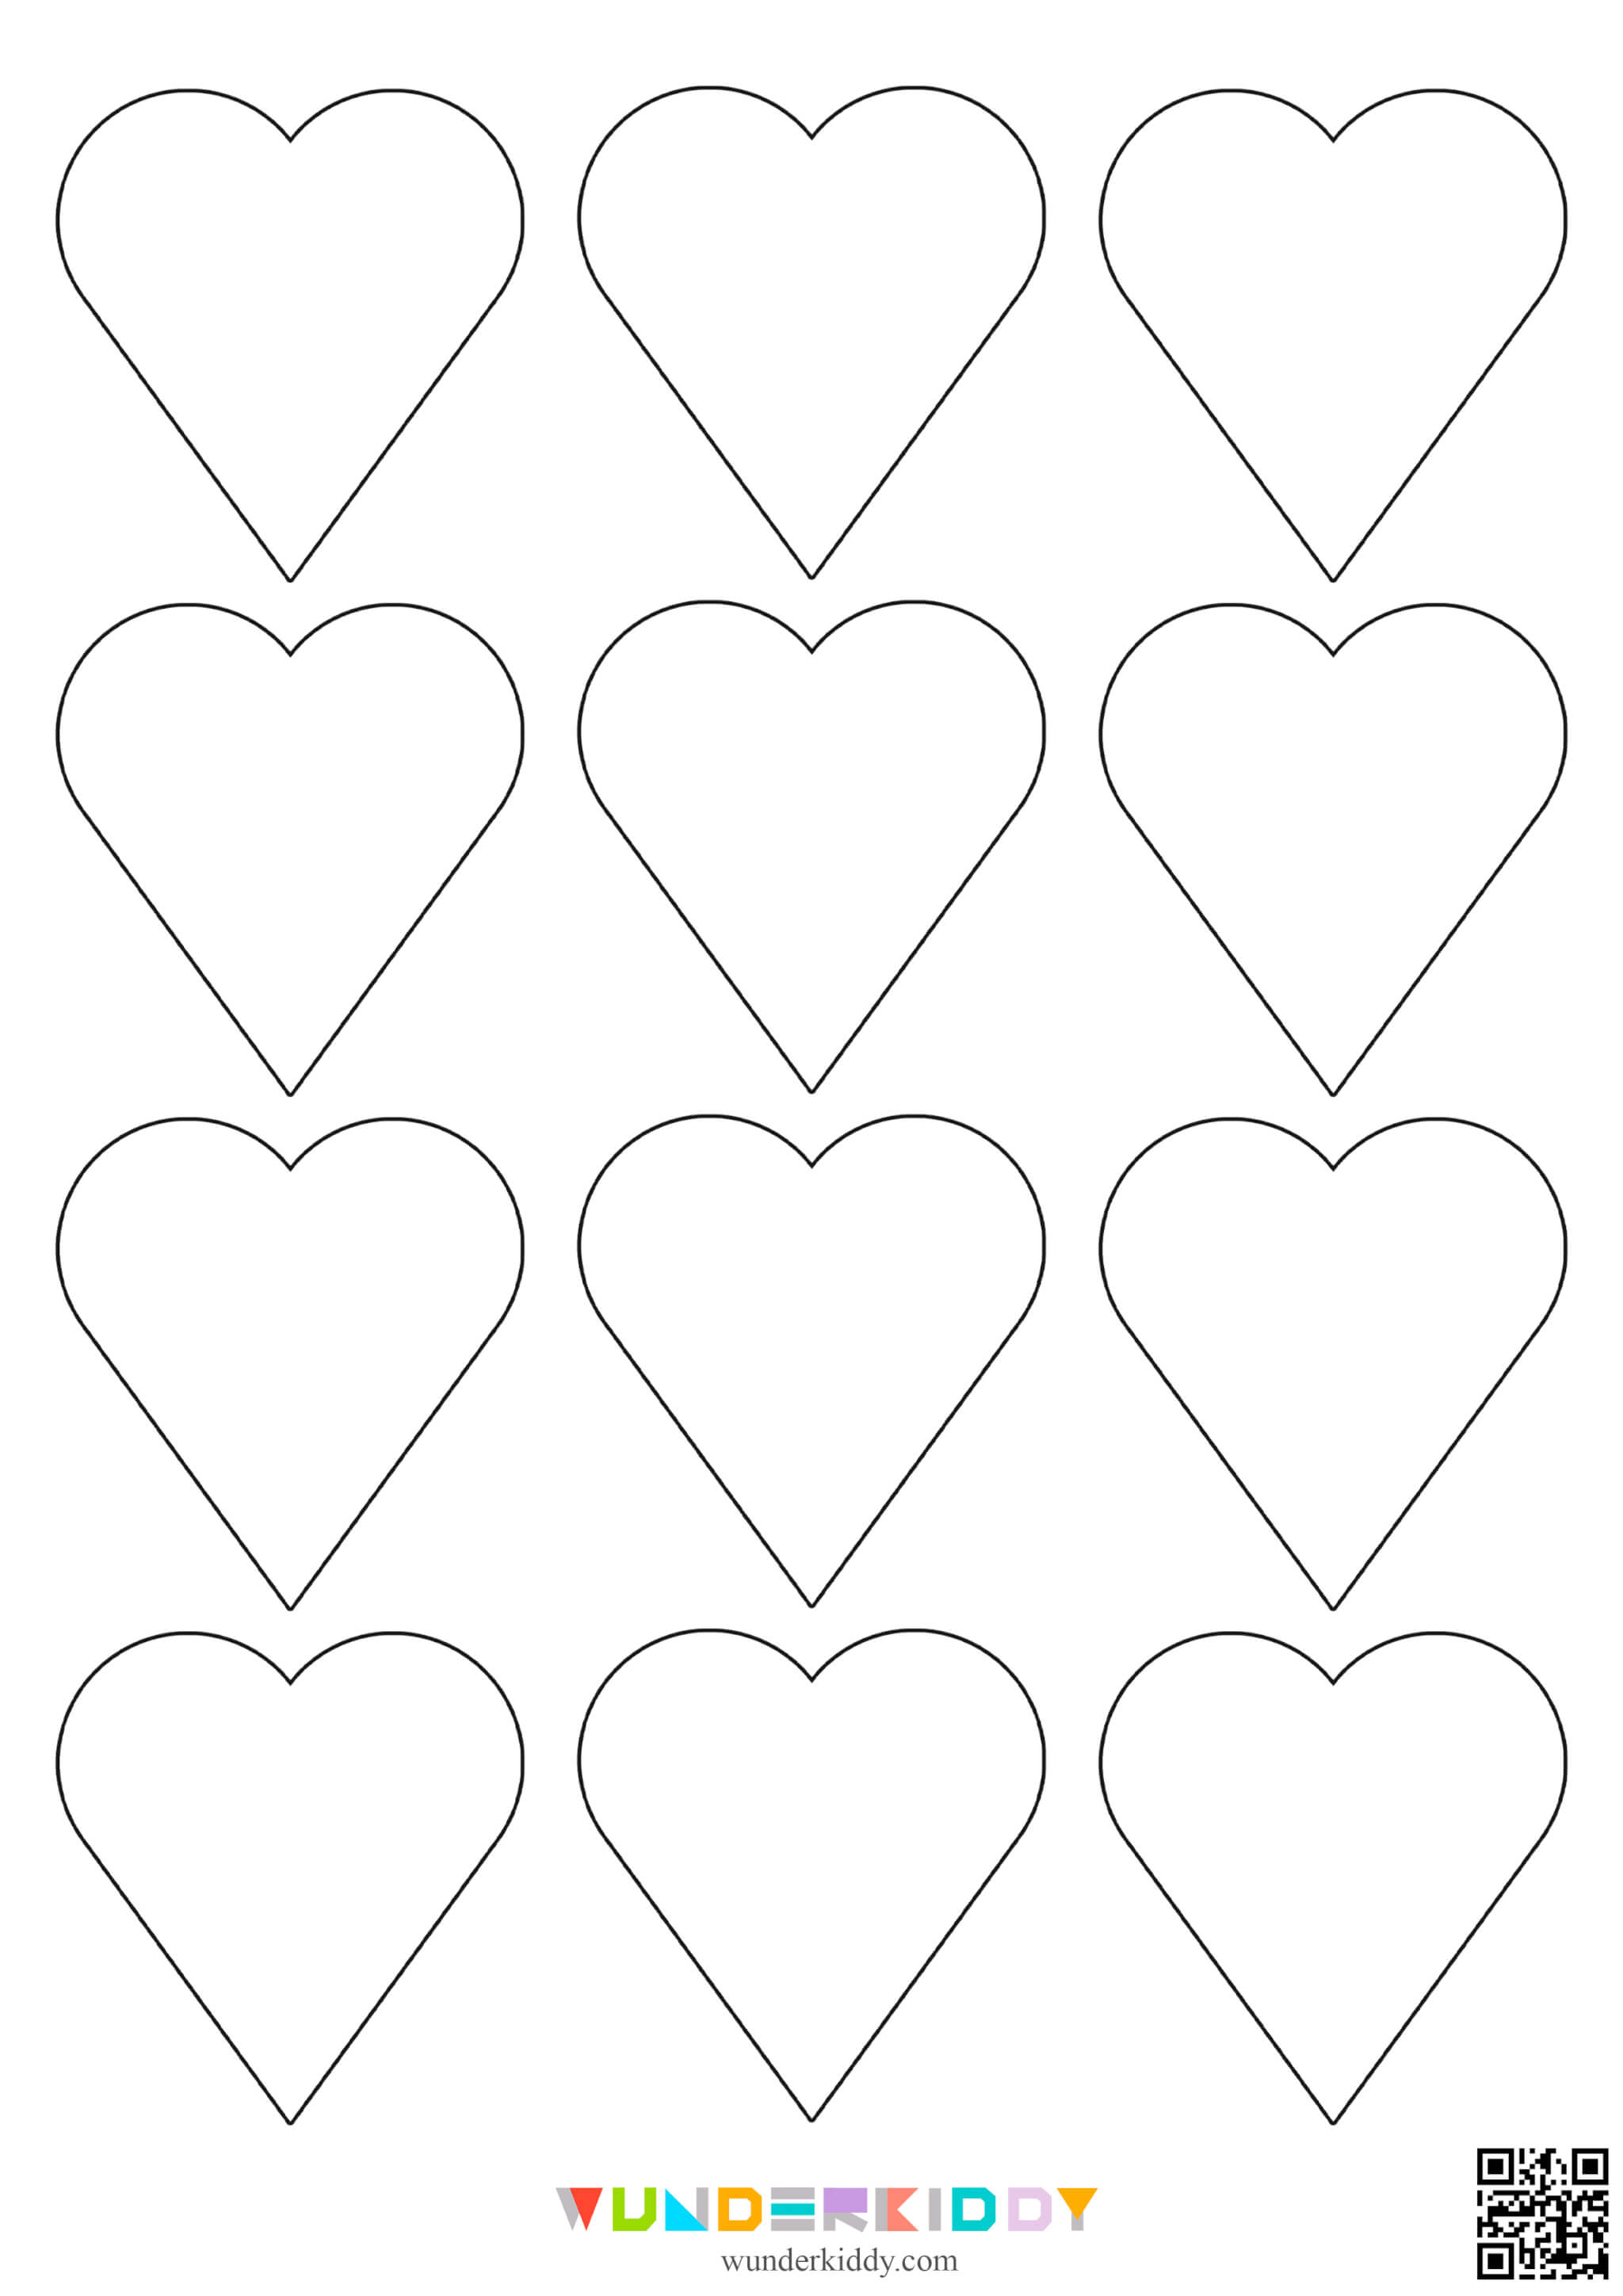 Heart Template Printable - Image 8